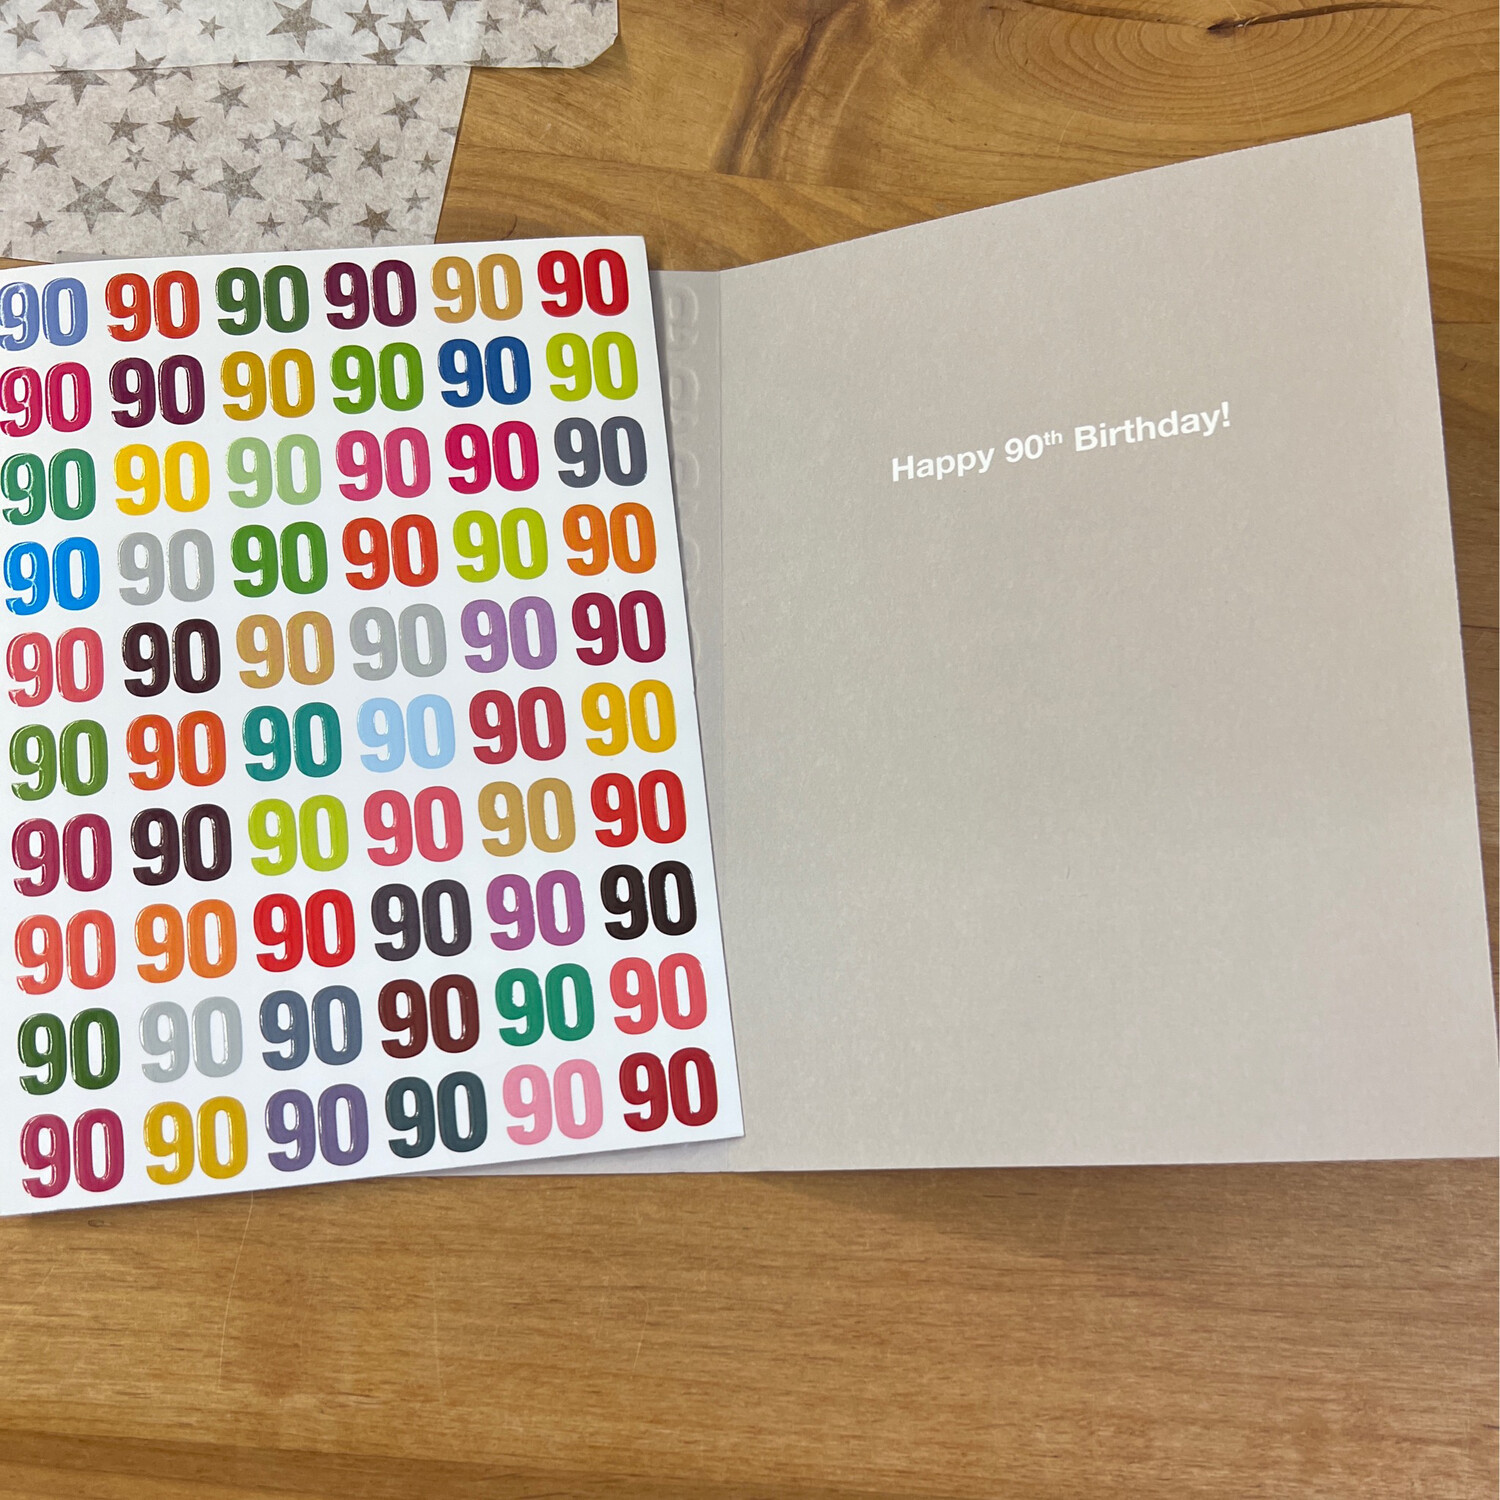 90 NINETY Birthday Card